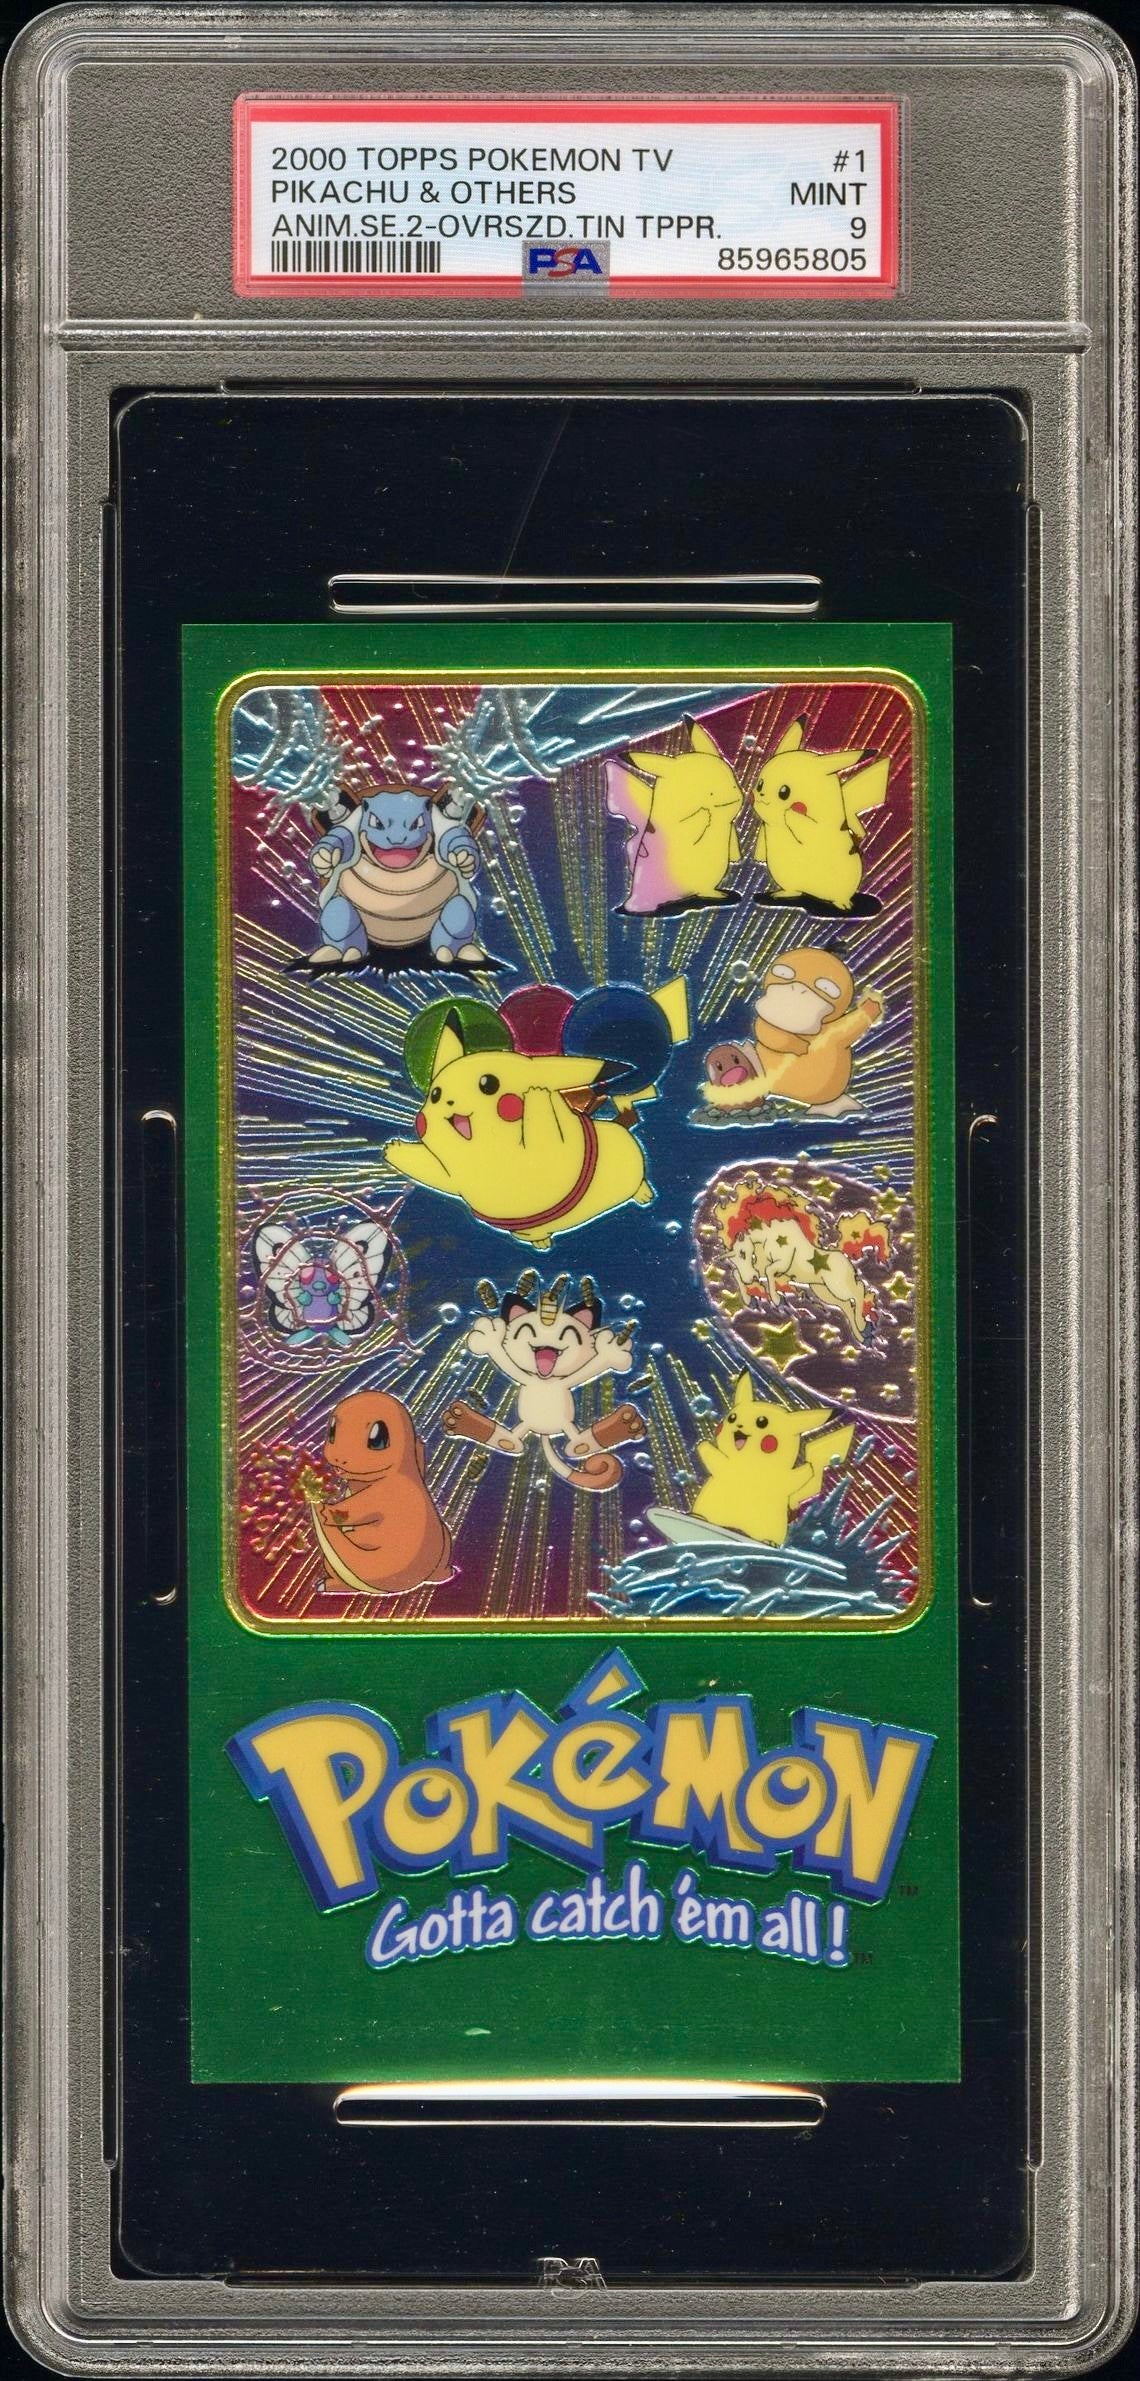 PSA 9 - Pikachu & Others TOPPS Anime Ser. 2 O/S Tin Topper- Pokemon